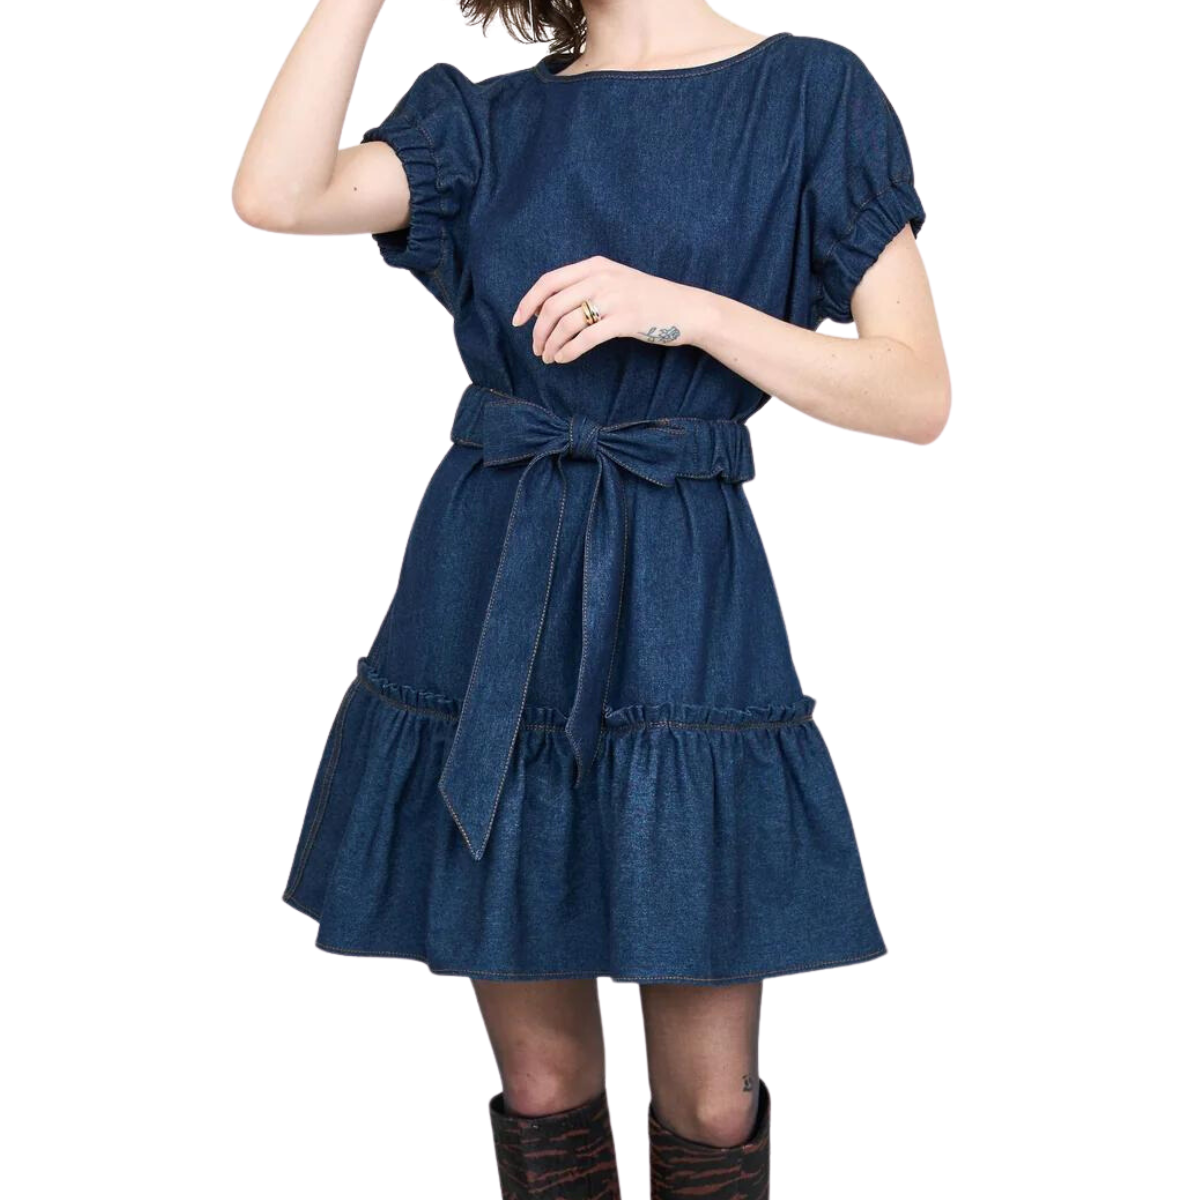 Inclan Millie Dress - Denim